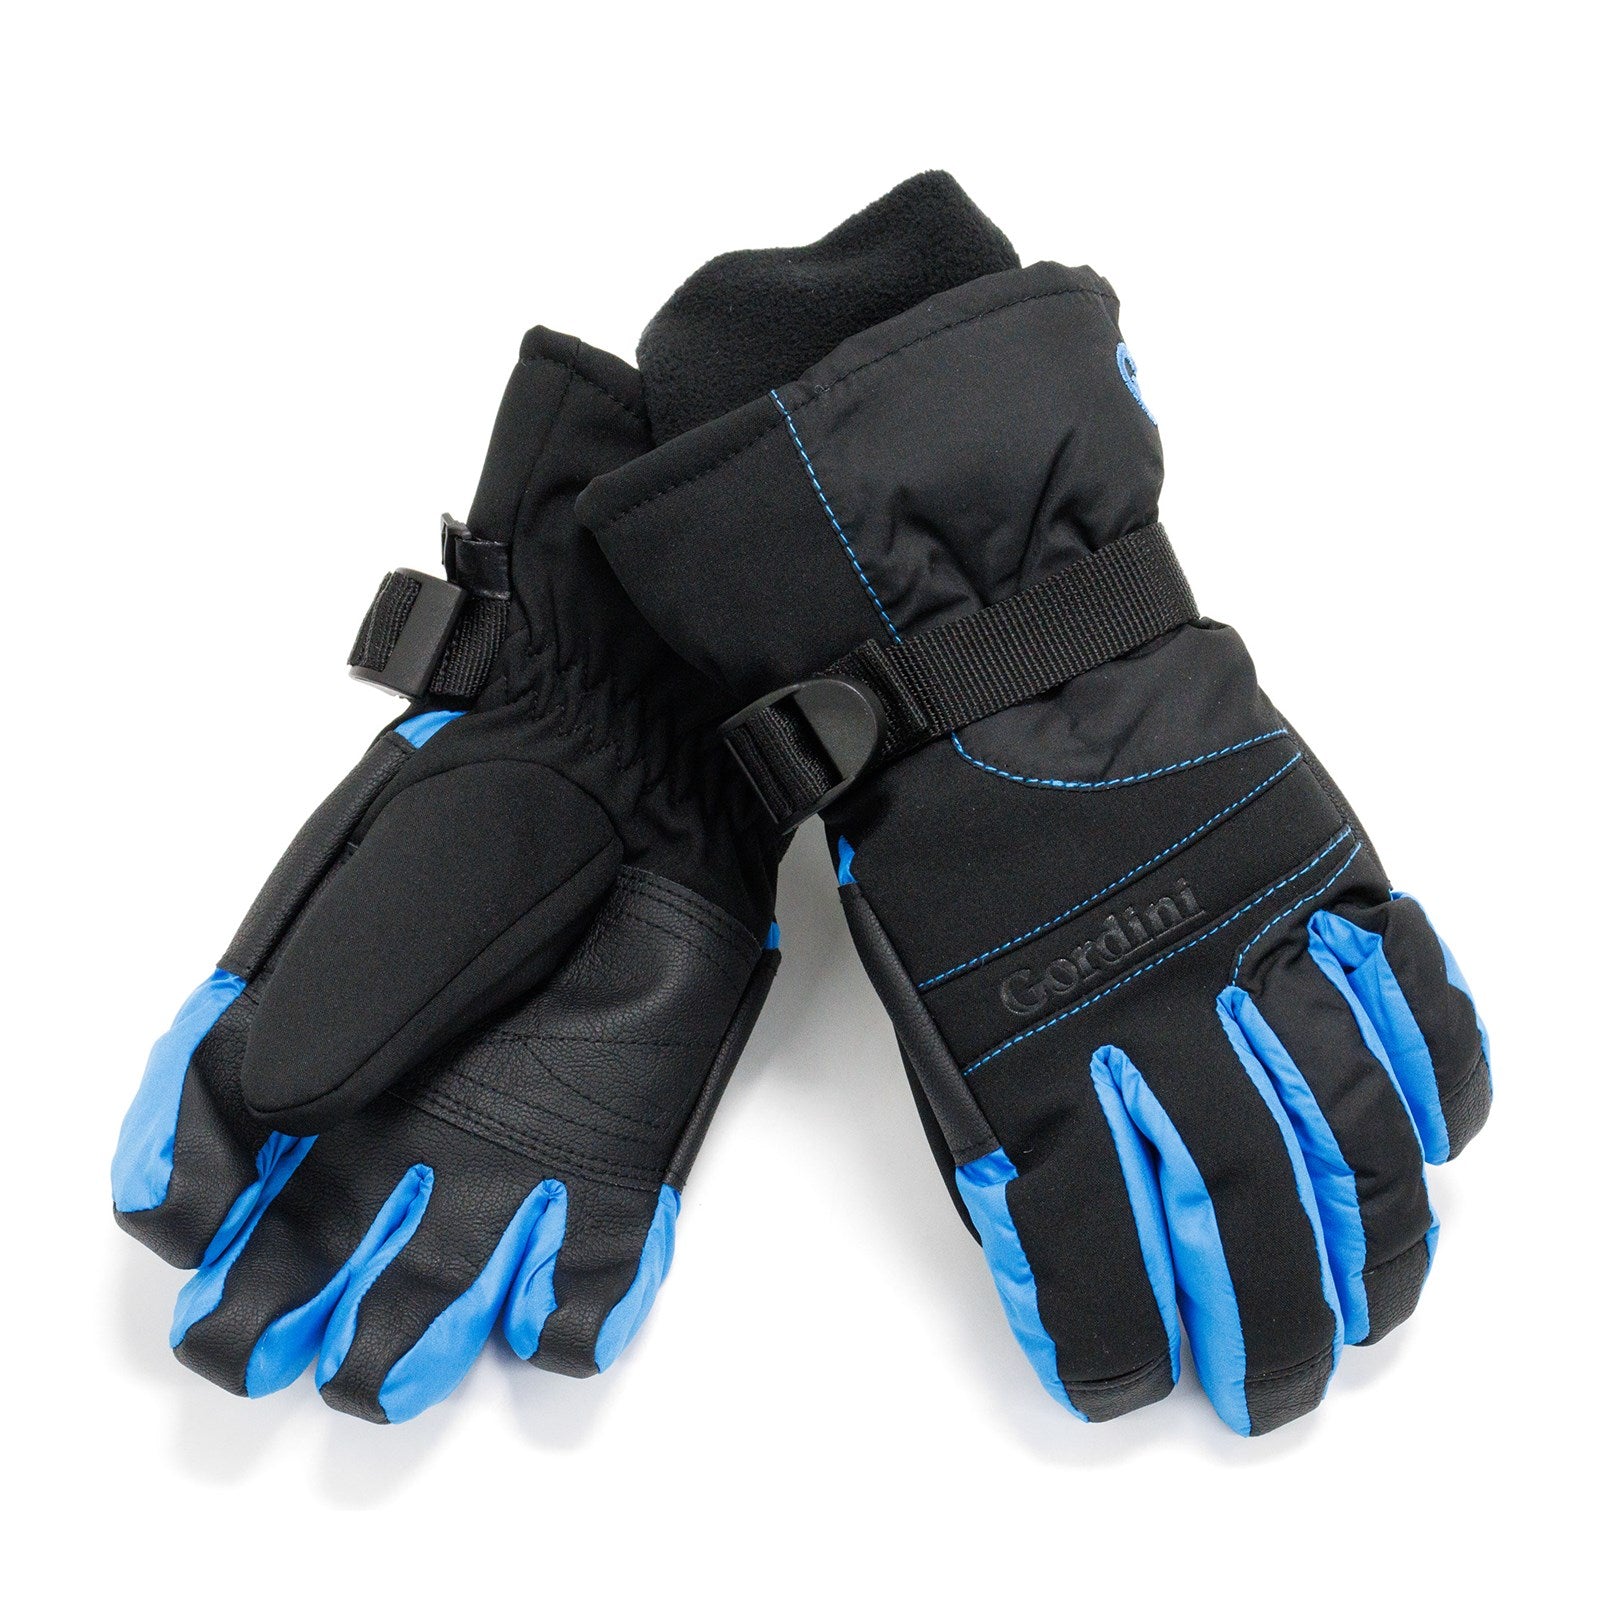 Gordini Boy Aquabloc Iii Waterproof Insulated Junior Gloves